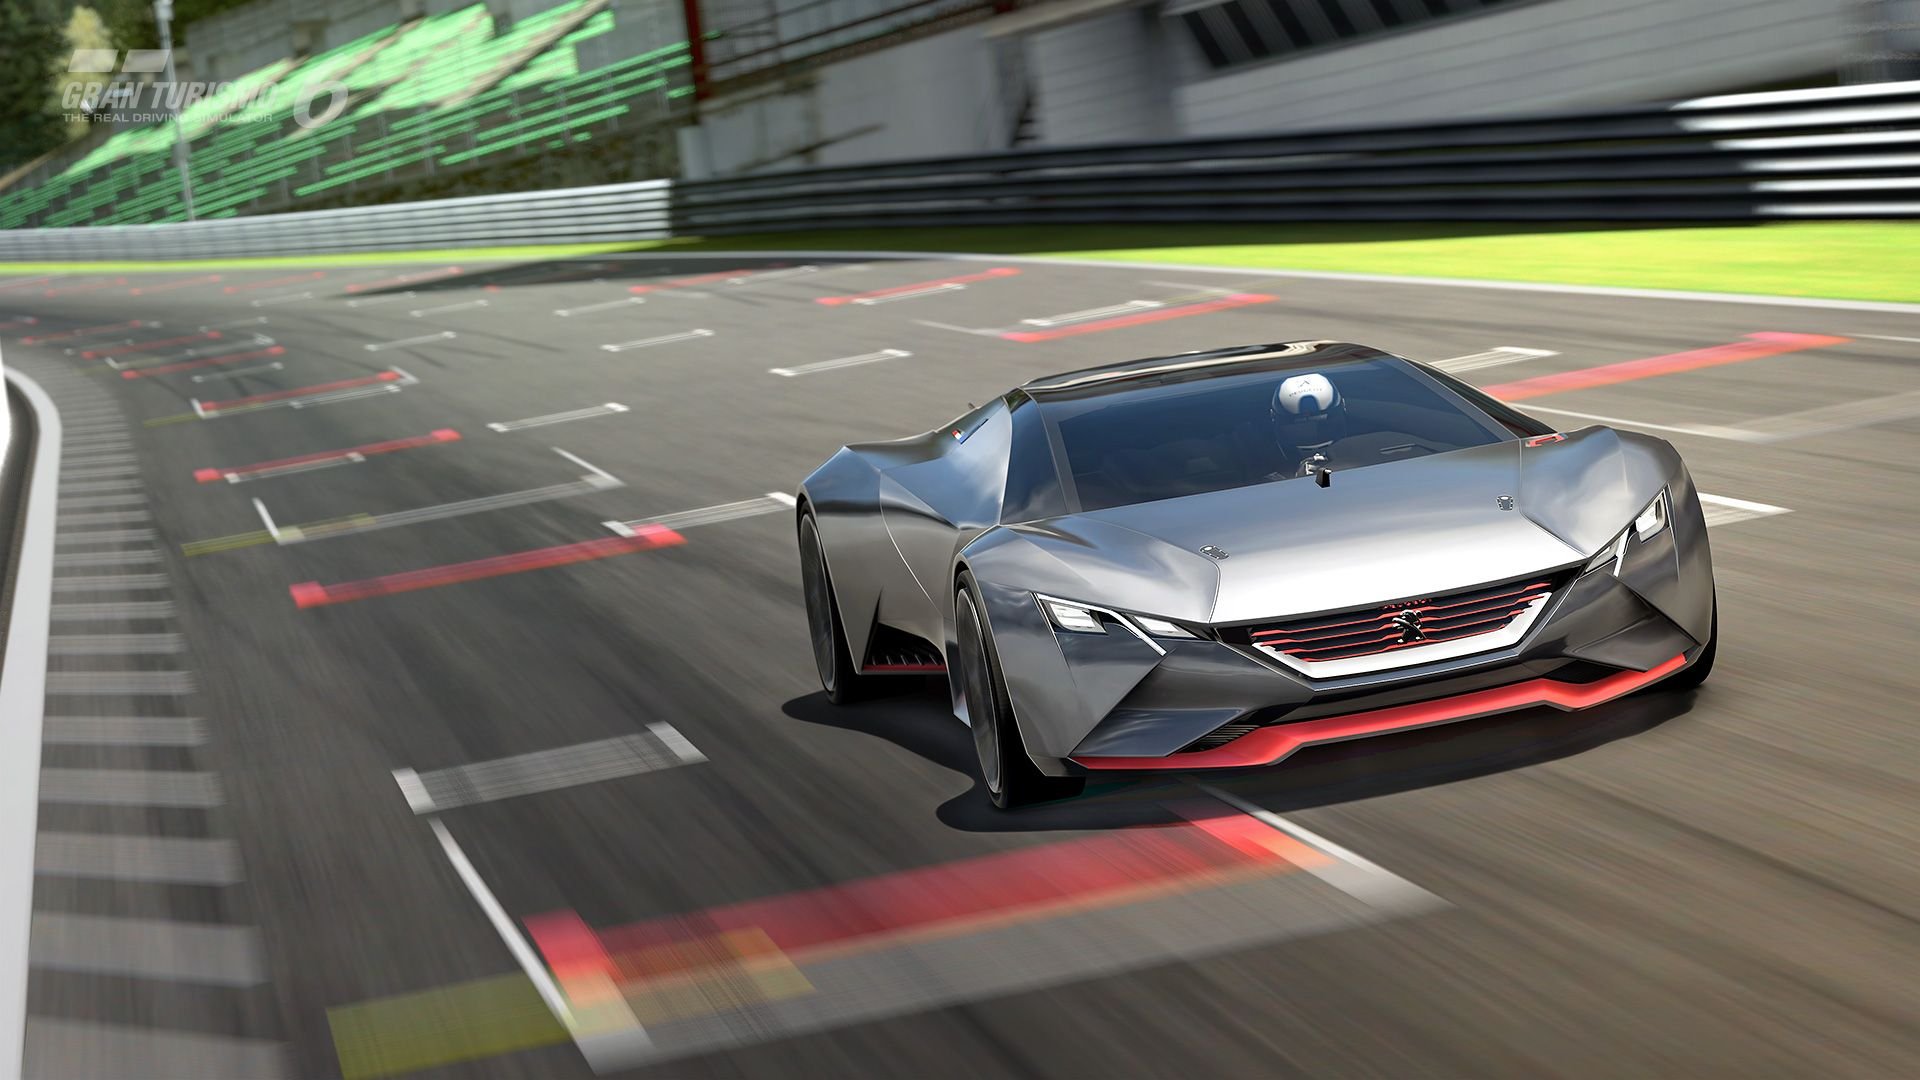 gran, Turismo 6, Peugeot, Vision, Concept, Cars, Supercars, Videogames Wallpaper